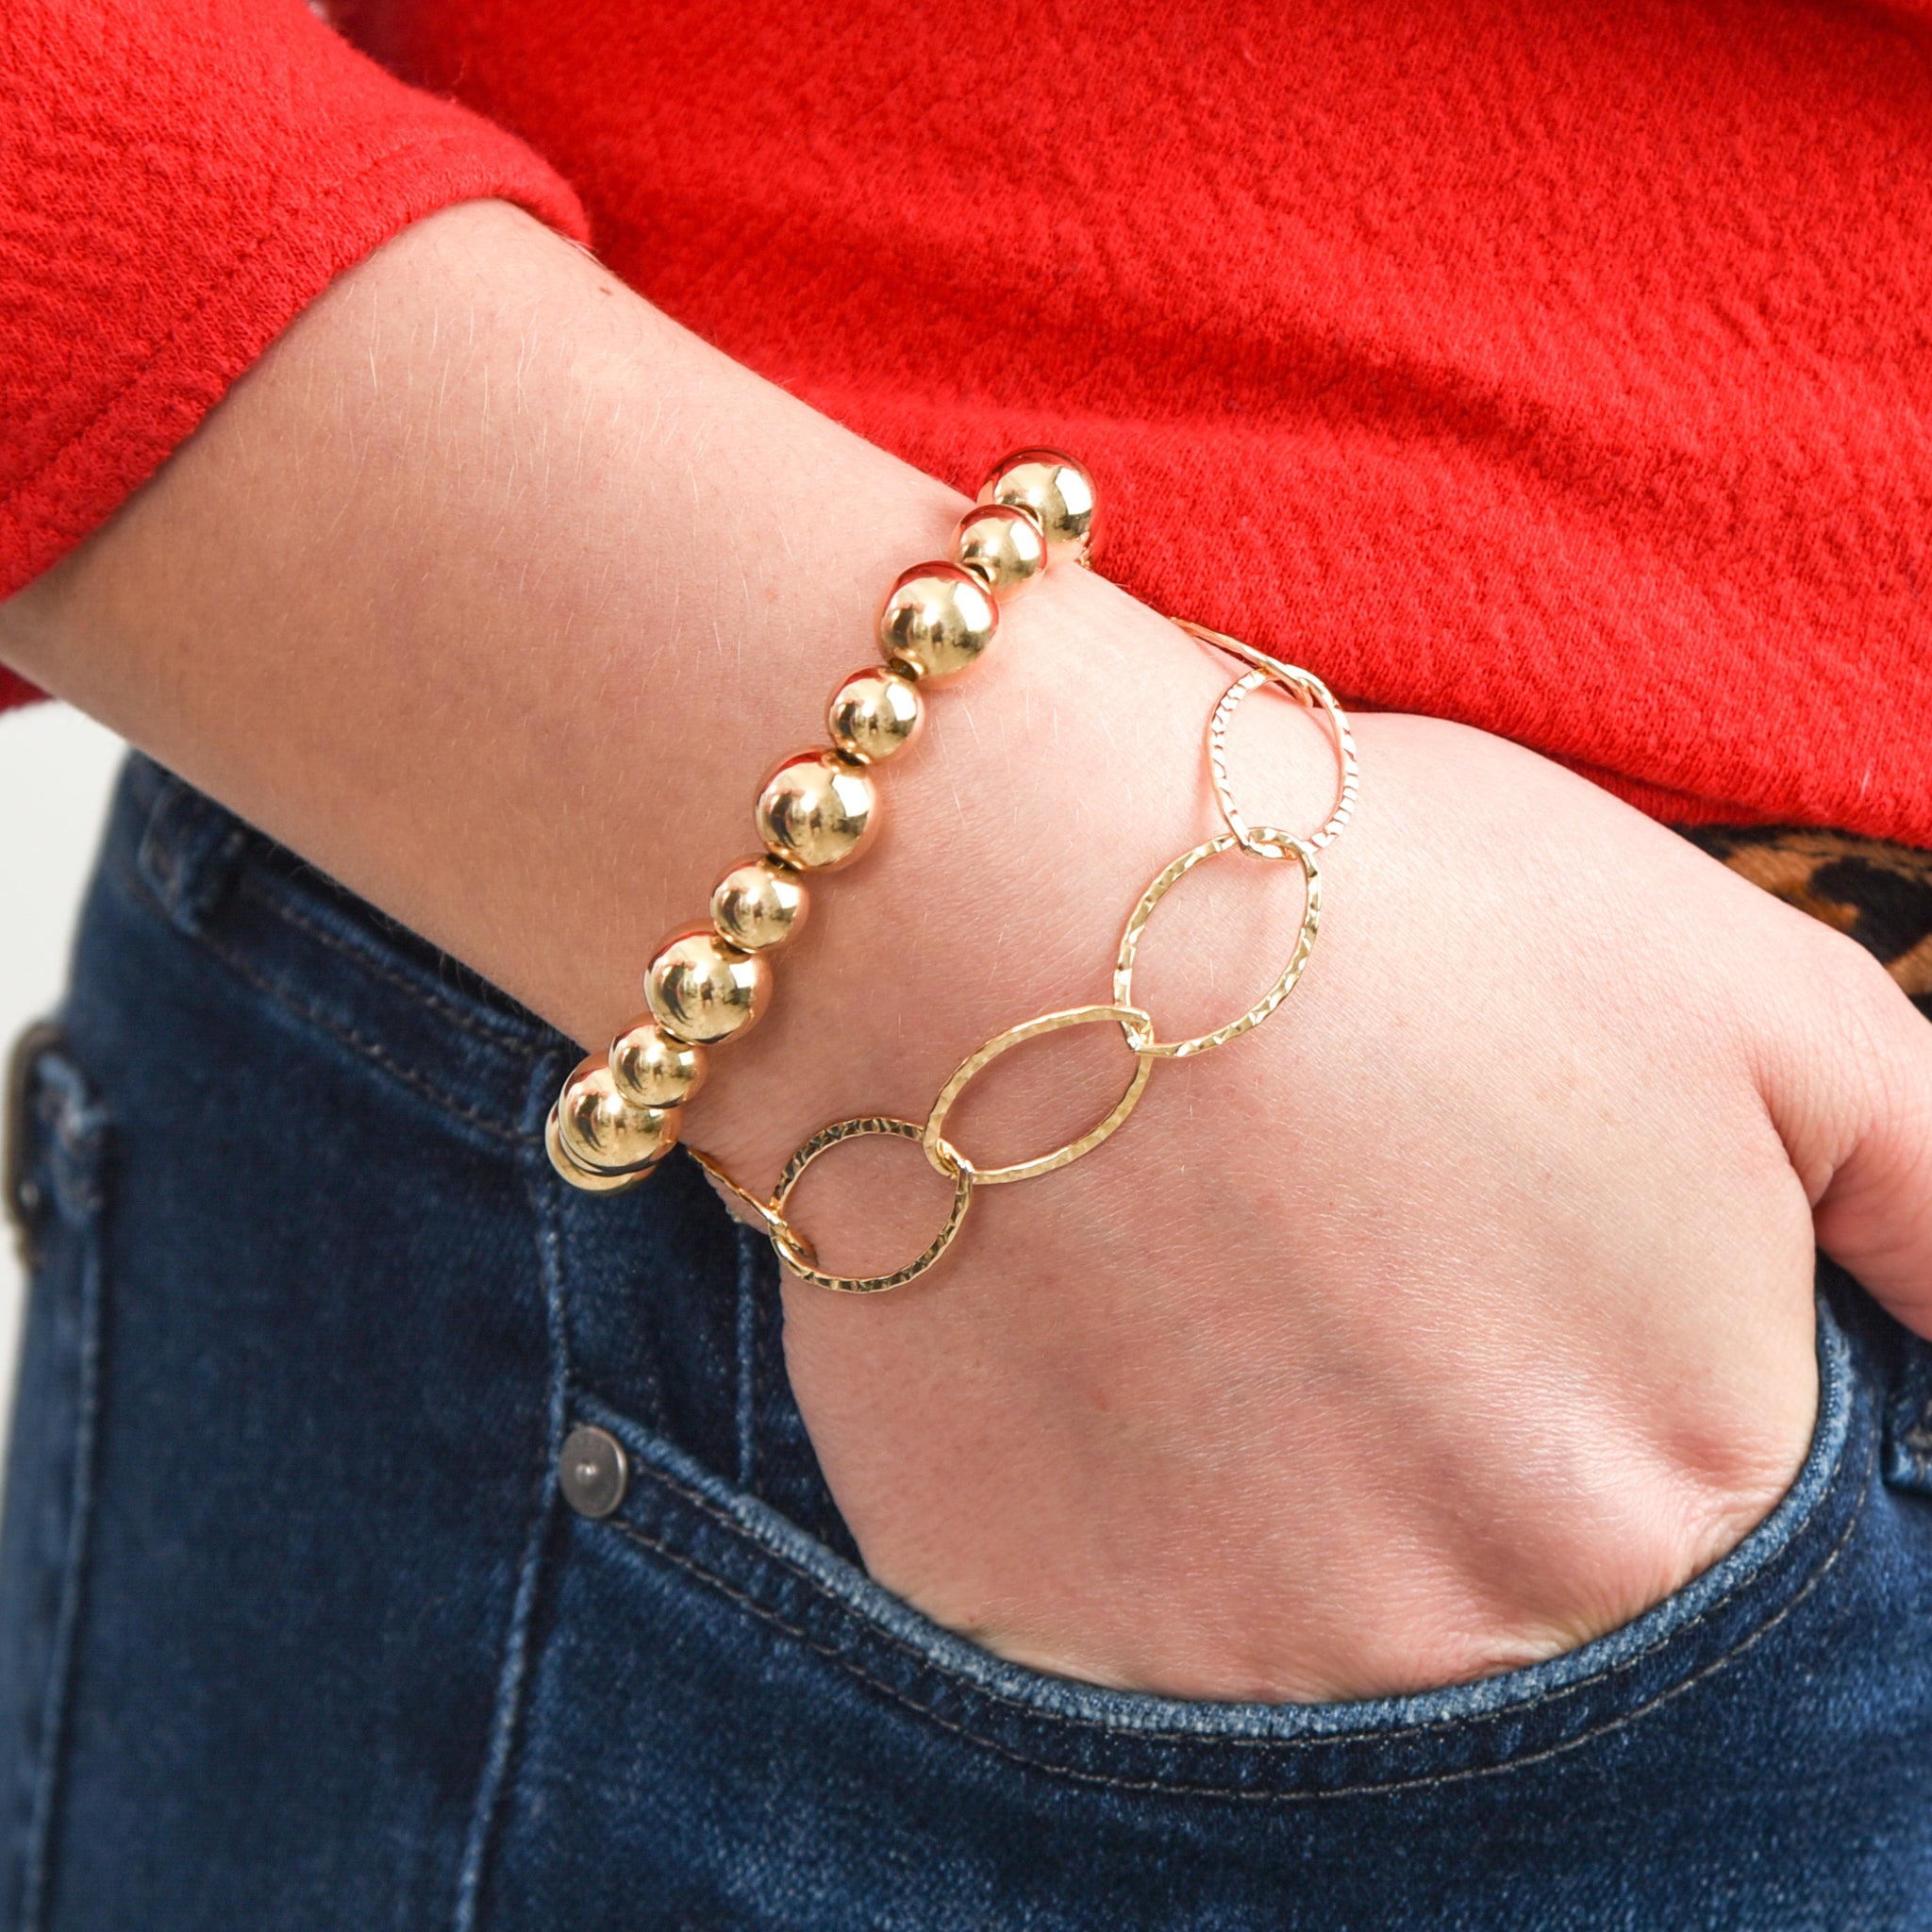 14k Gold Filled Oval Chain & Beaded Bracelet Set